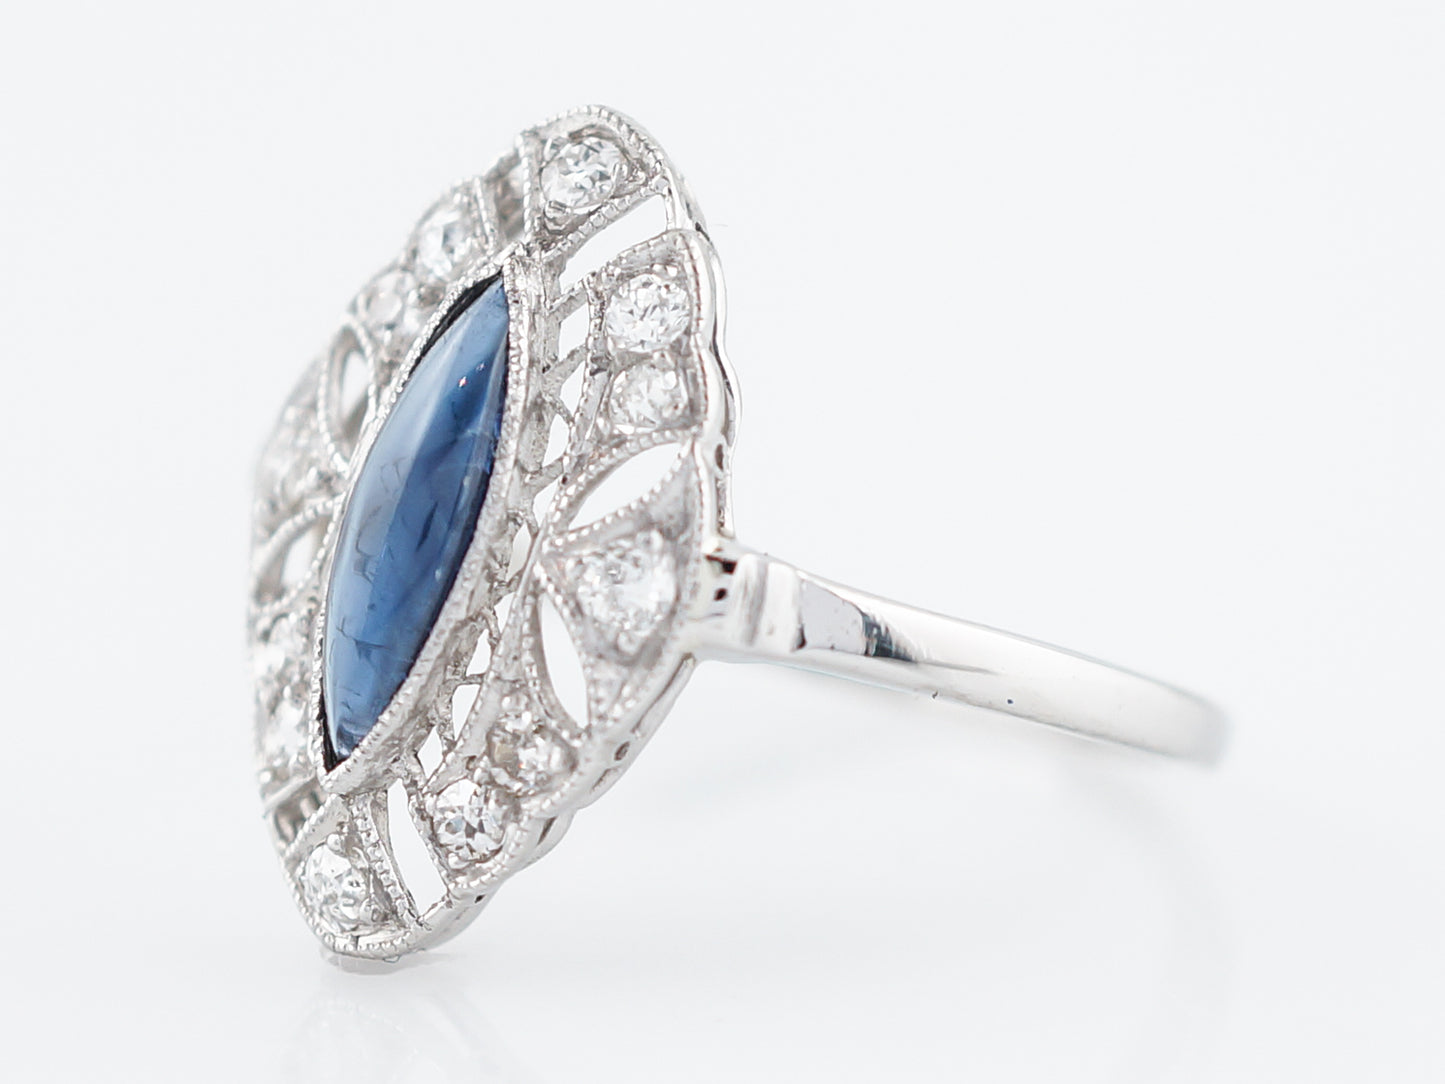 Antique Right Hand Ring Art Deco 1.11 Cabochon Marquise Cut Sapphire in Platinum